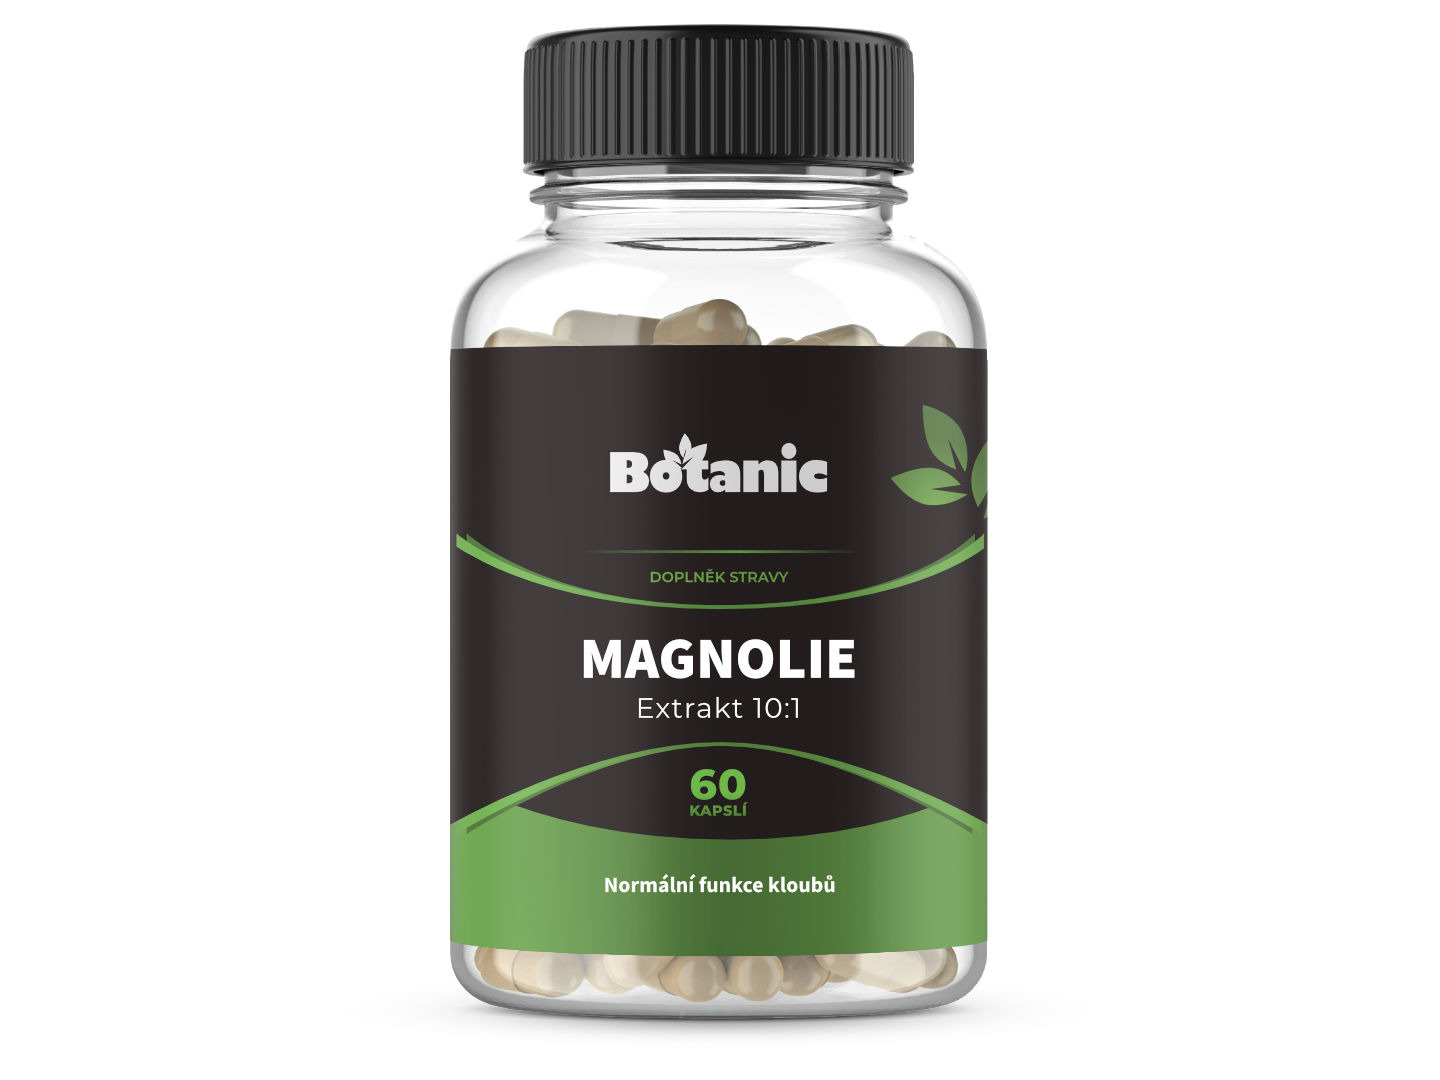 Botanic Magnolie - Extrakt 10:1 v kapslích 60kap.